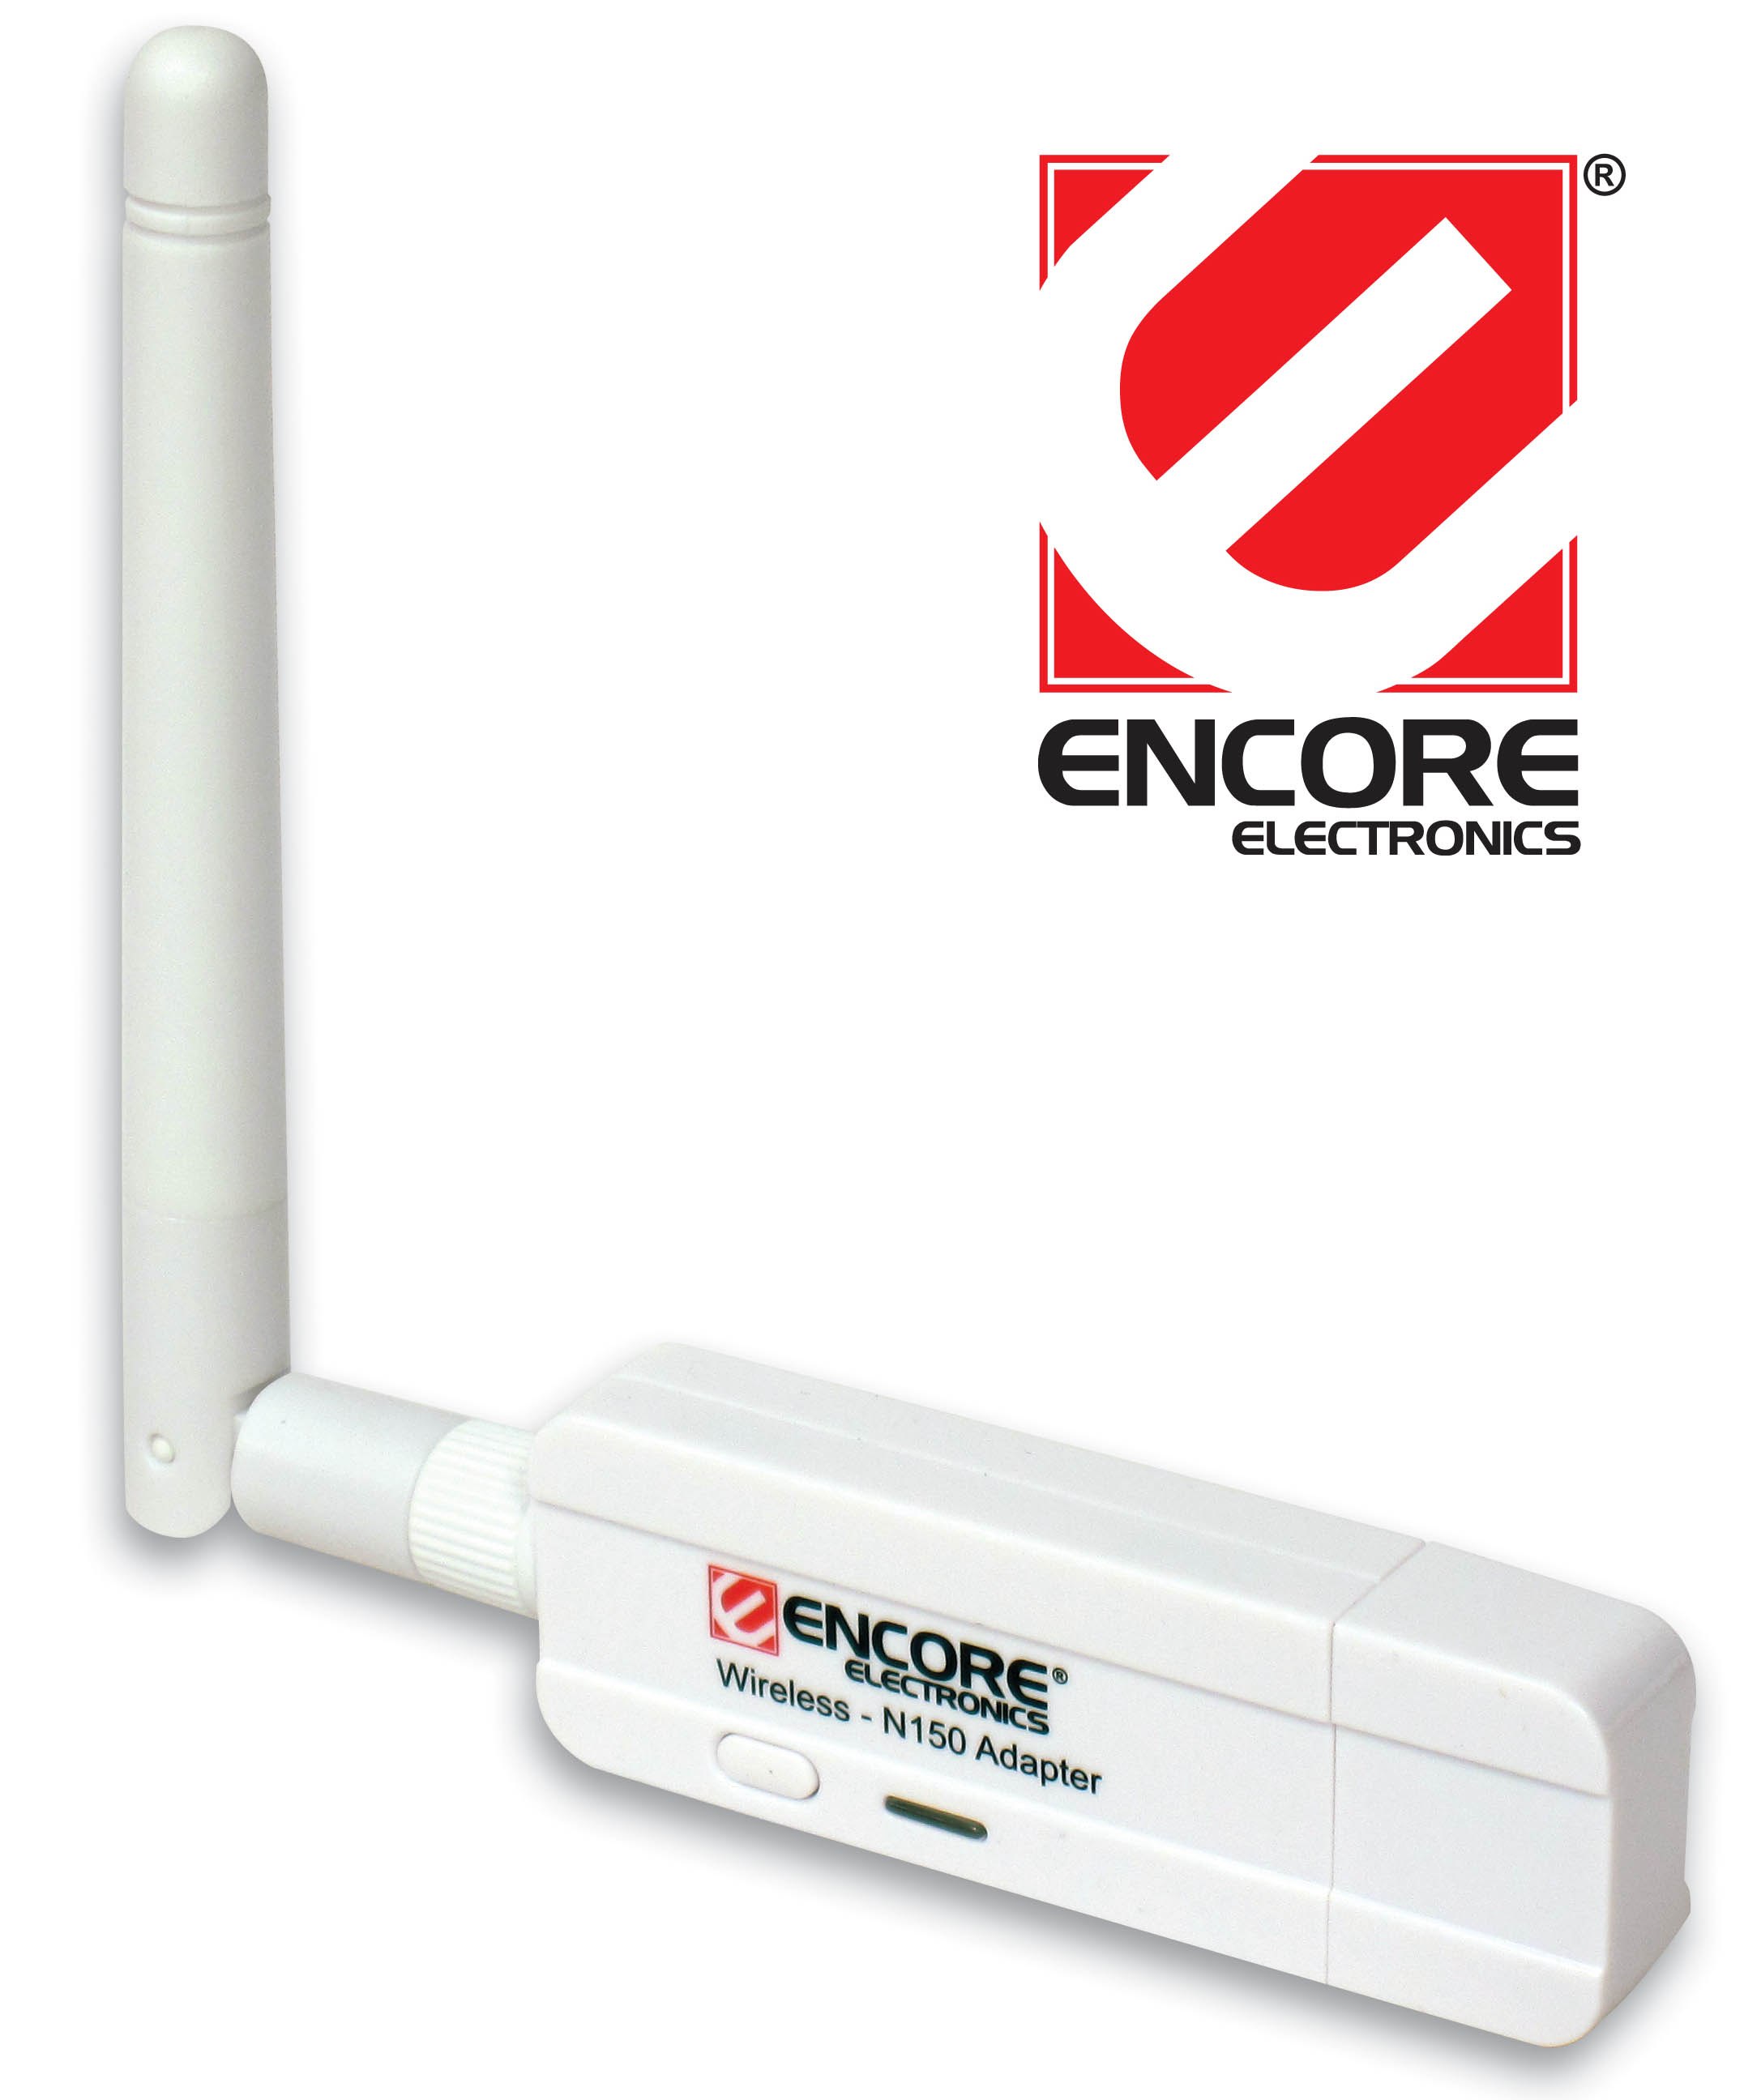 Encore electronics n150 drivers for mac